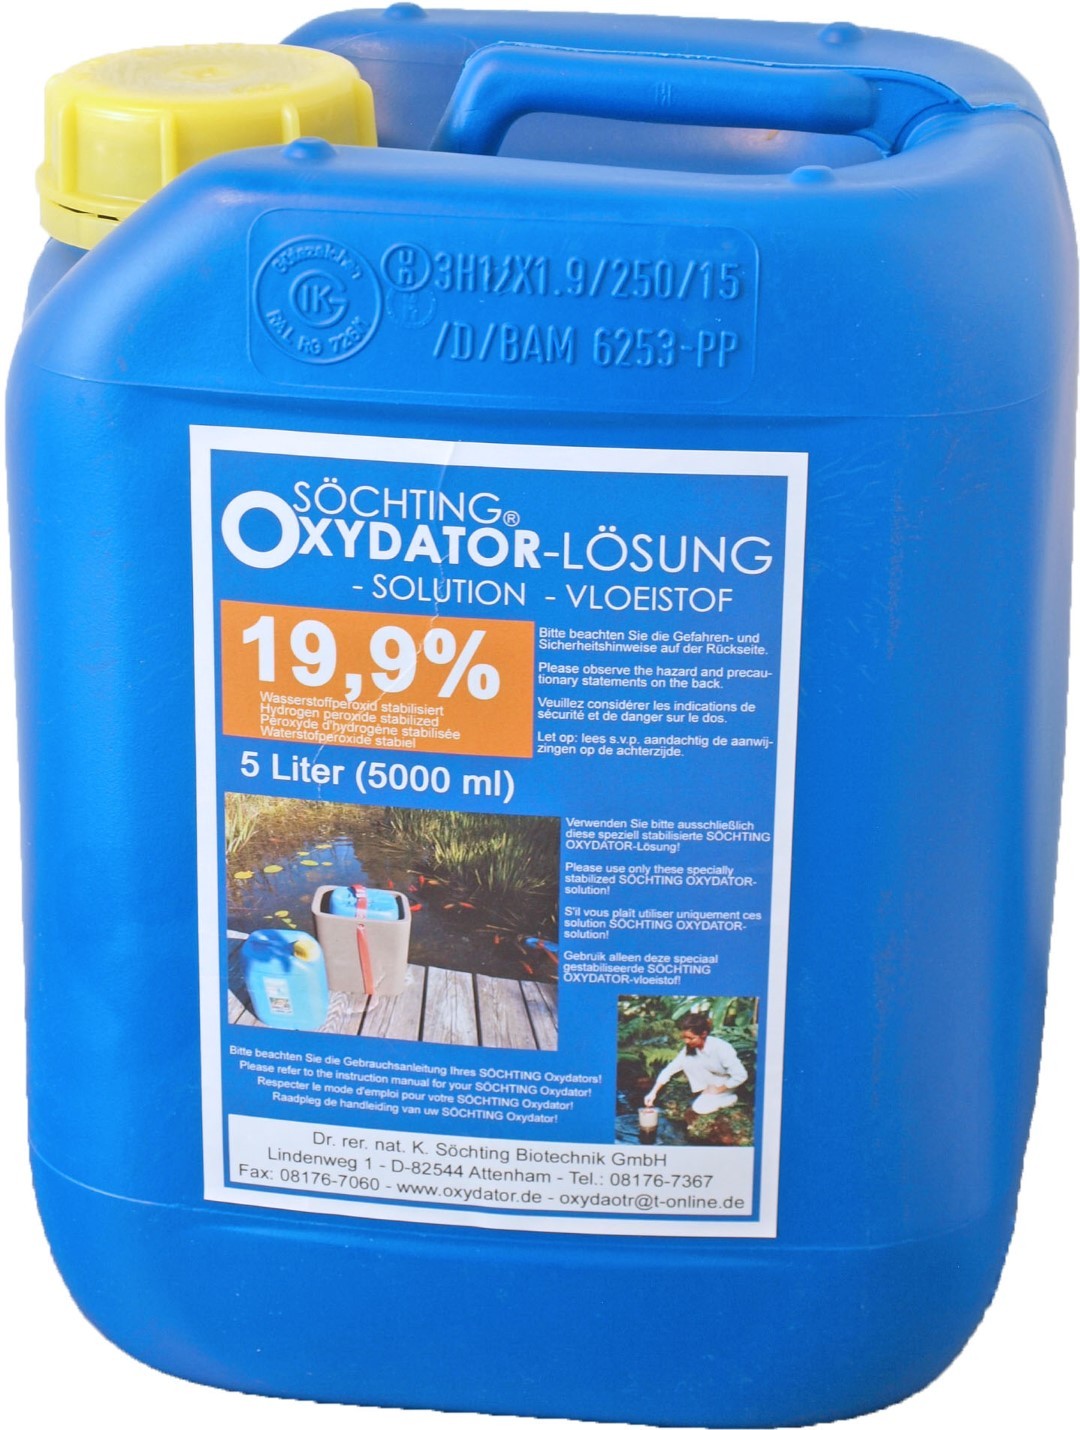 Sochting oxydator vloeistof 19.9% jerrycan 5 liter